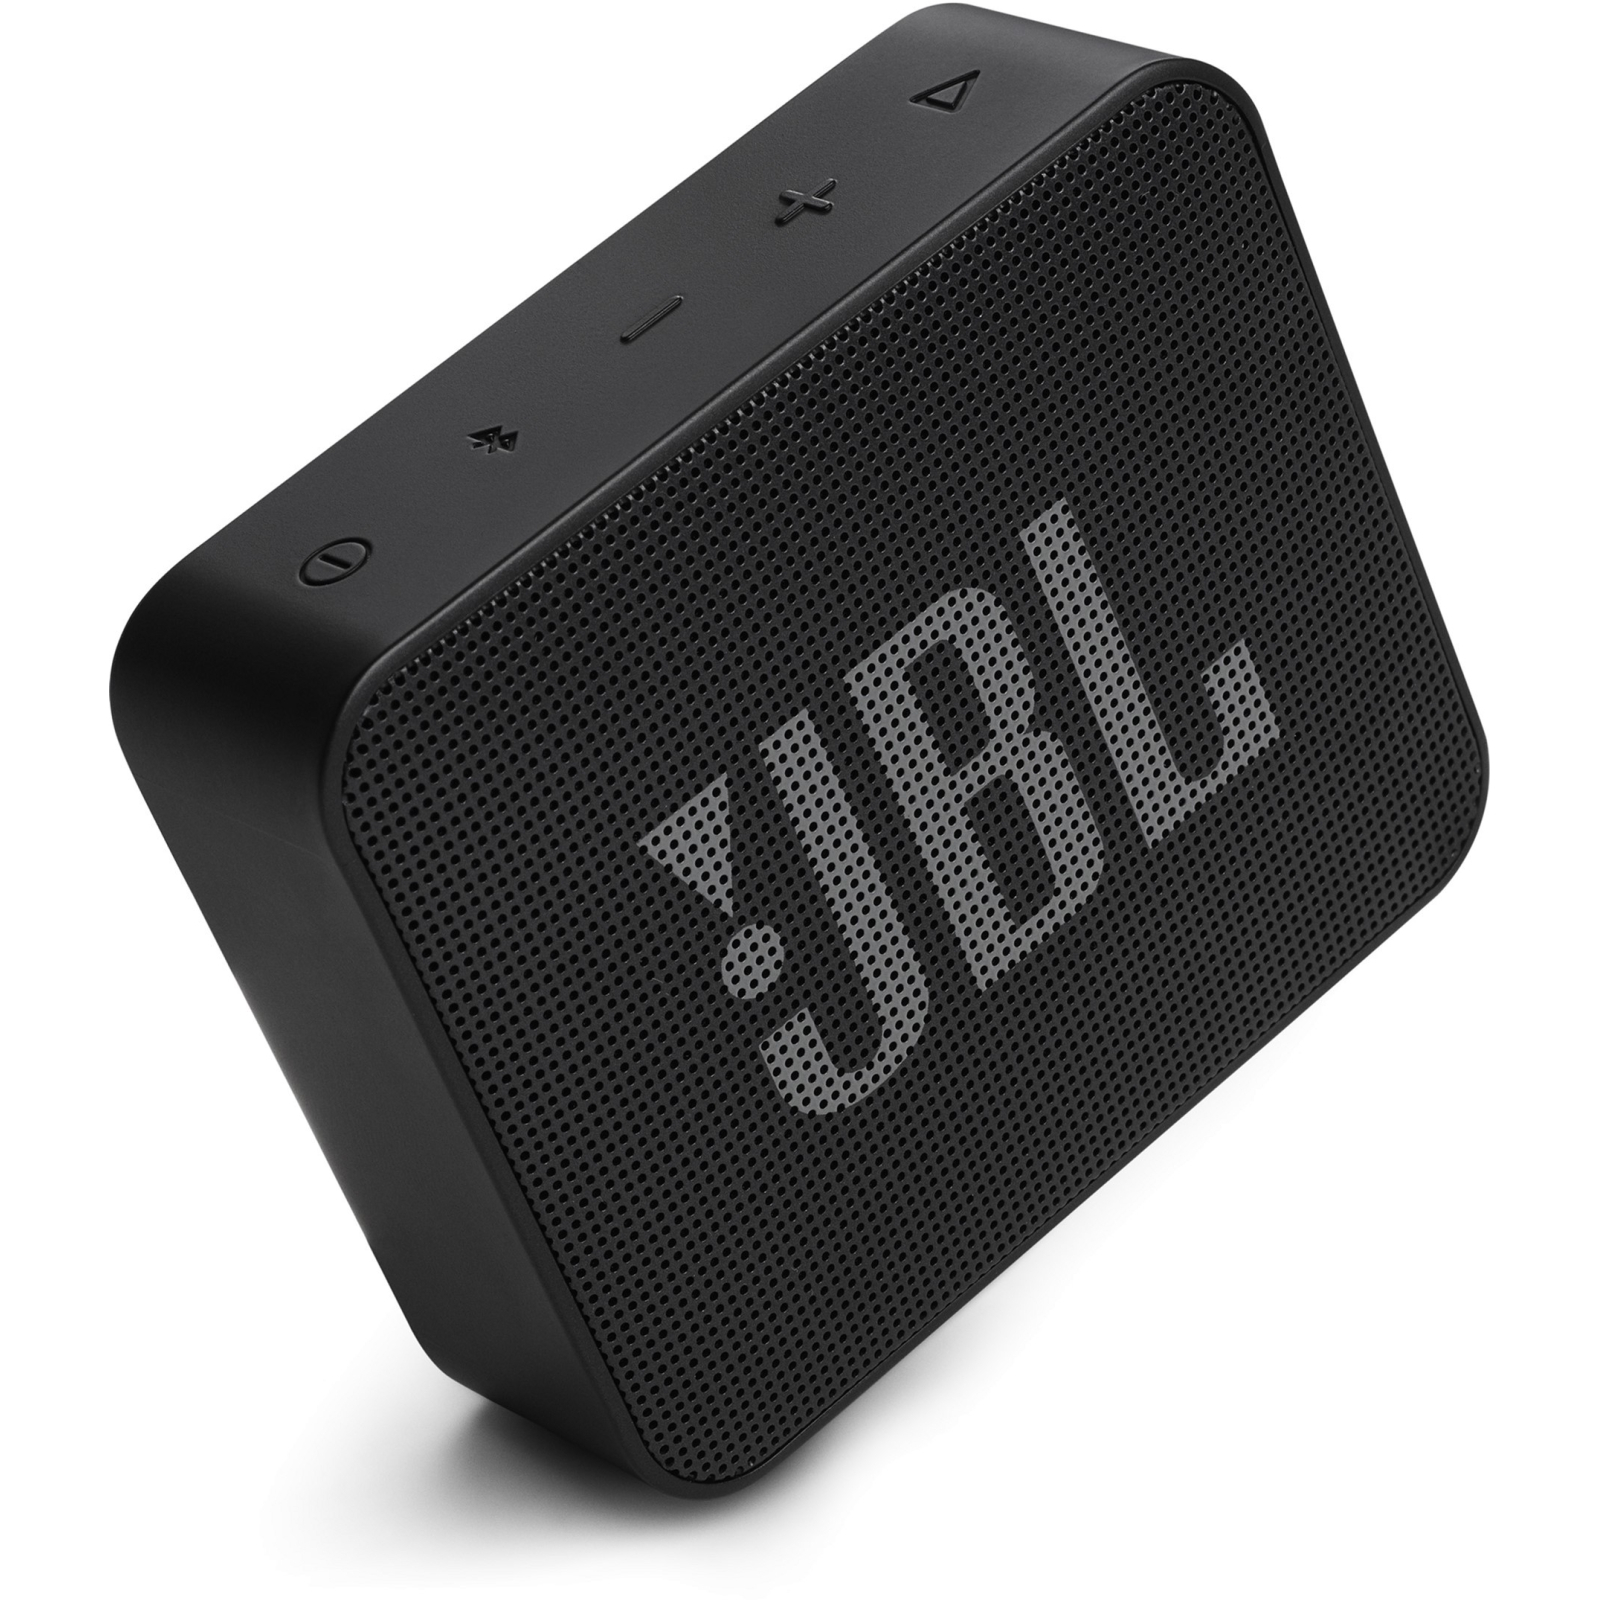 Акустическая система JBL Go Essential Blue (JBLGOESBLU) изображение 3